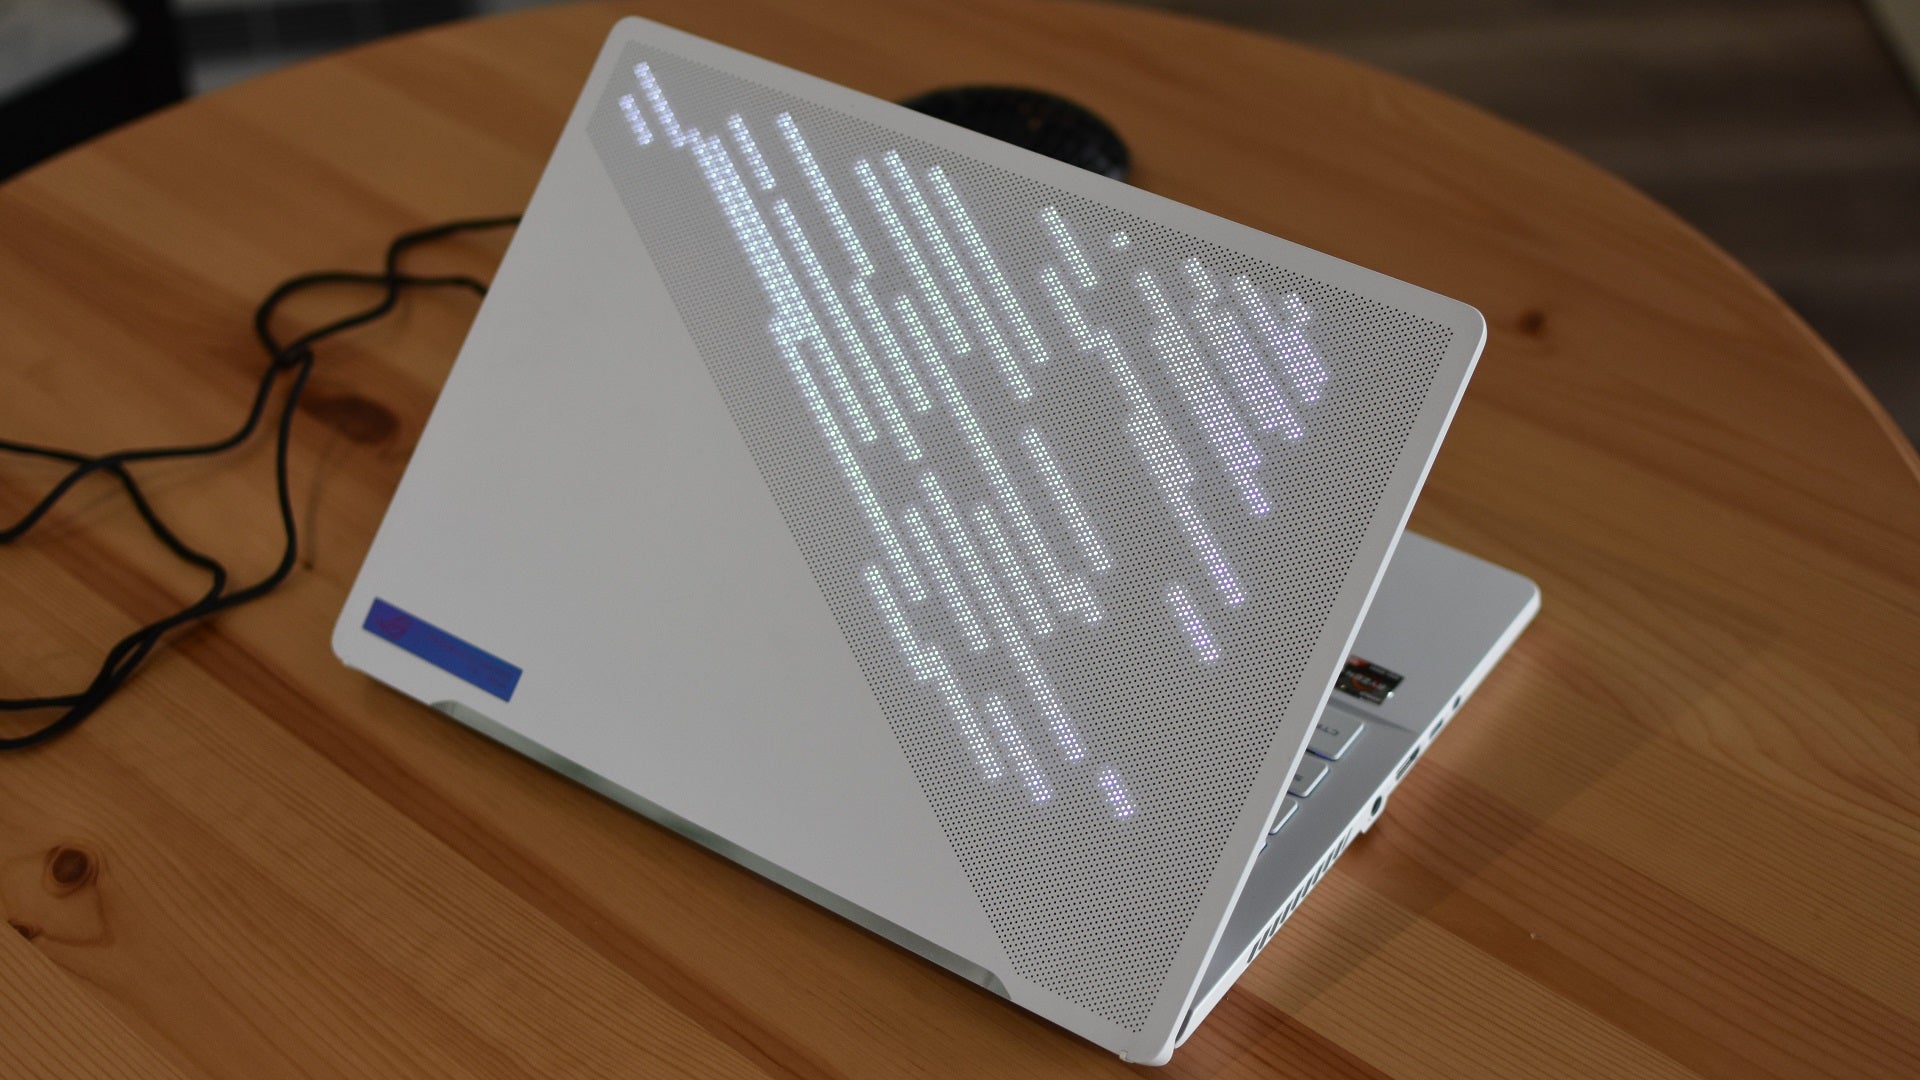 The AinMe Matrix display illuminating the Asus ROG Zephyrus G14 gaming laptop.